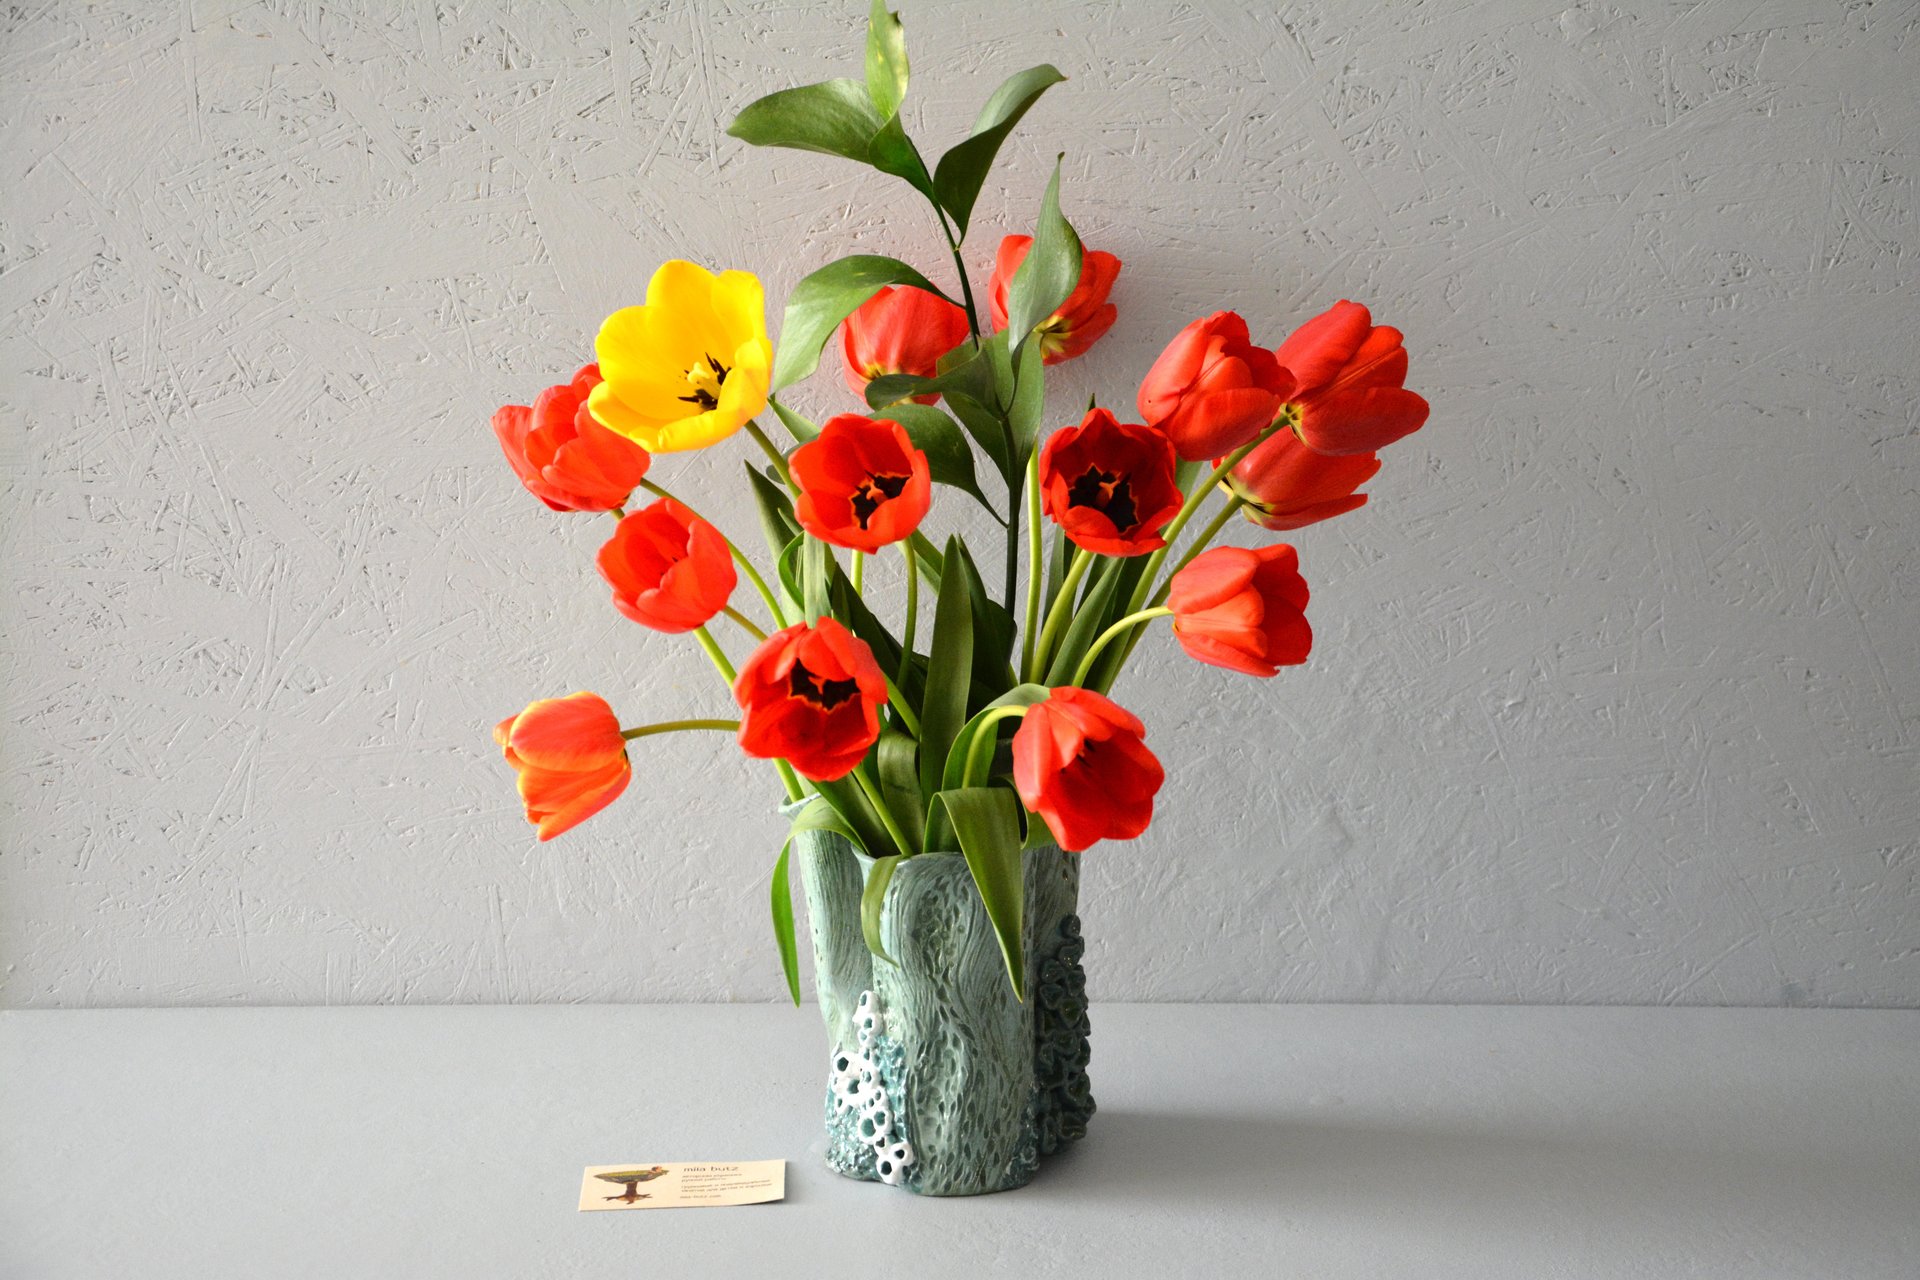 Decorative ceramic flower vase — Coral, height - 19 cm, photo 4 of 5. 1041.